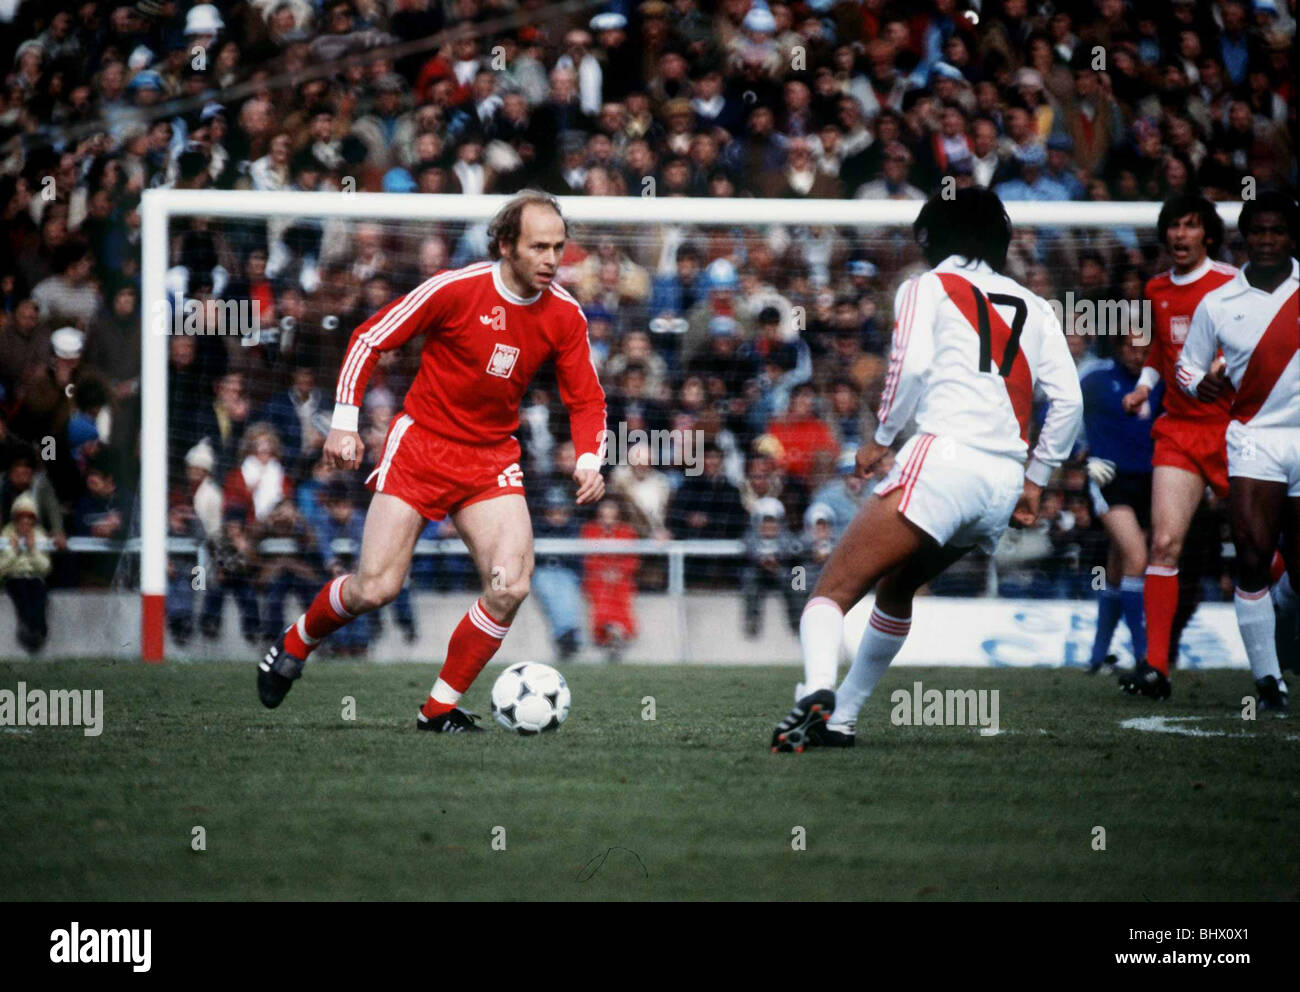 peru-v-poland-world-cup-1978-football-g-lato-with-ball-a-quesada-no17-BHX0X1.jpg